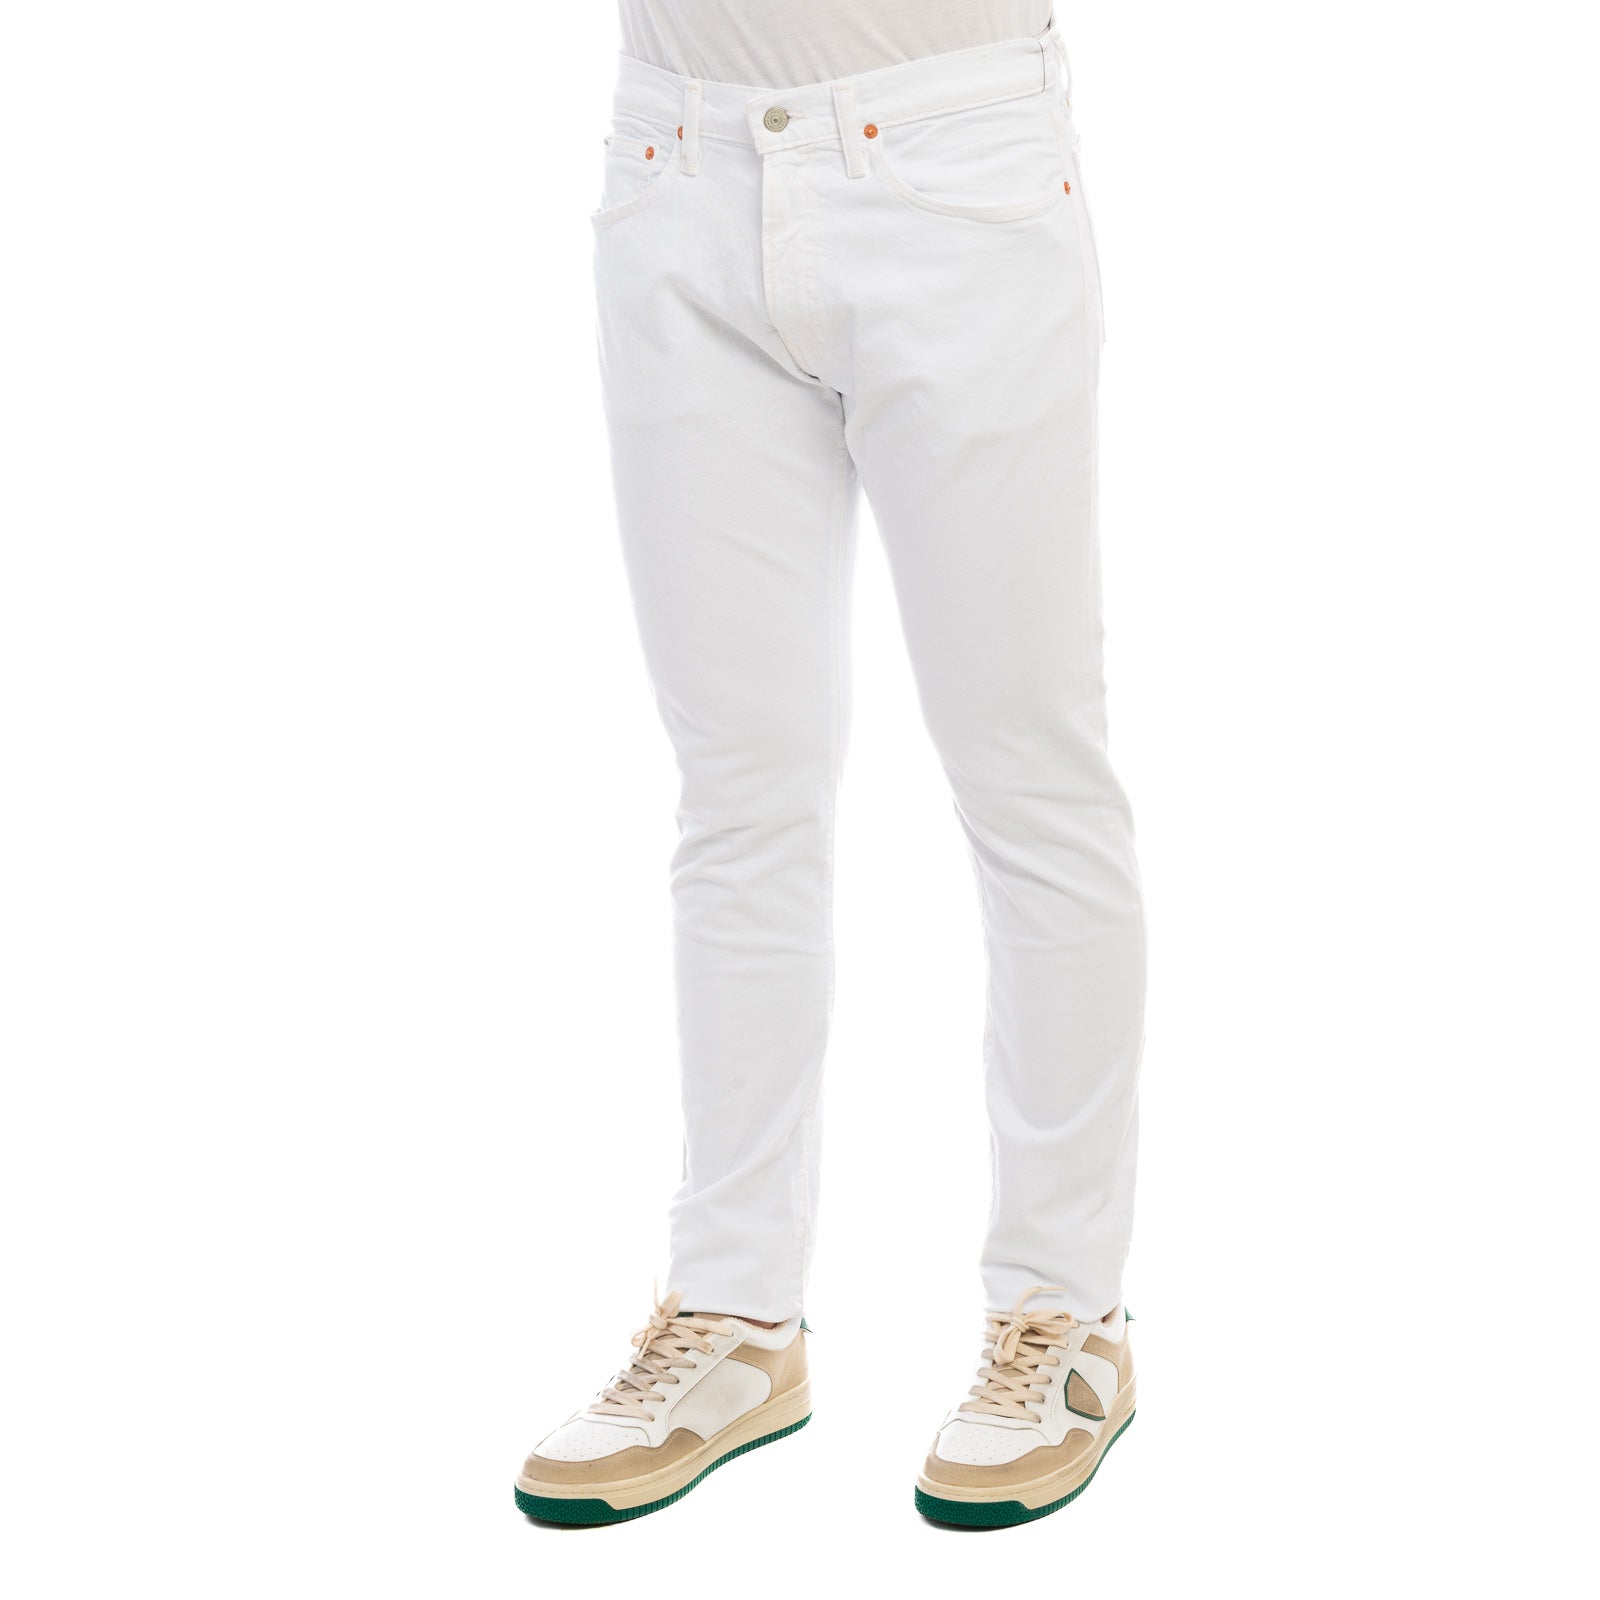 Jeans POLO RALPH LAUREN
Hdn white stretch